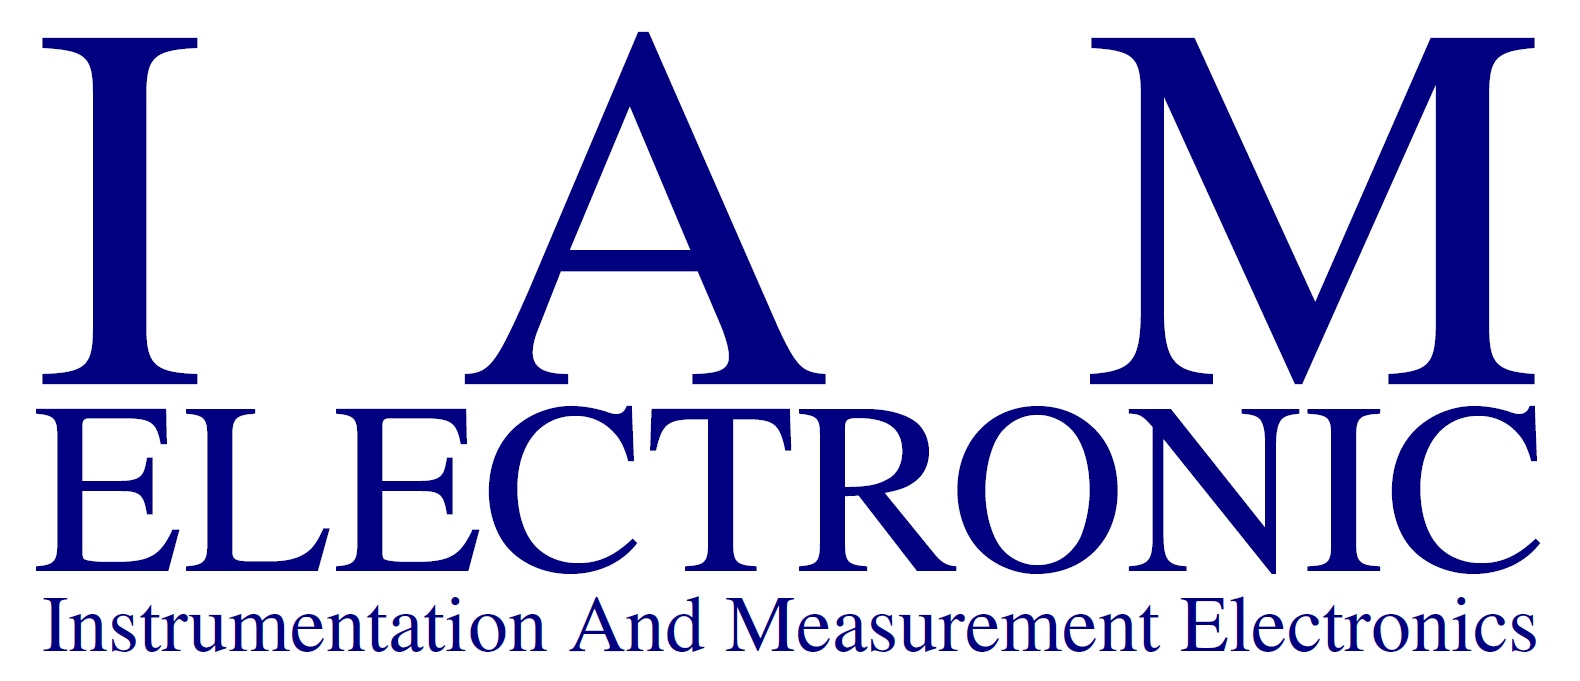 IAM Electronic - Instrumentation And Measurement Electronics